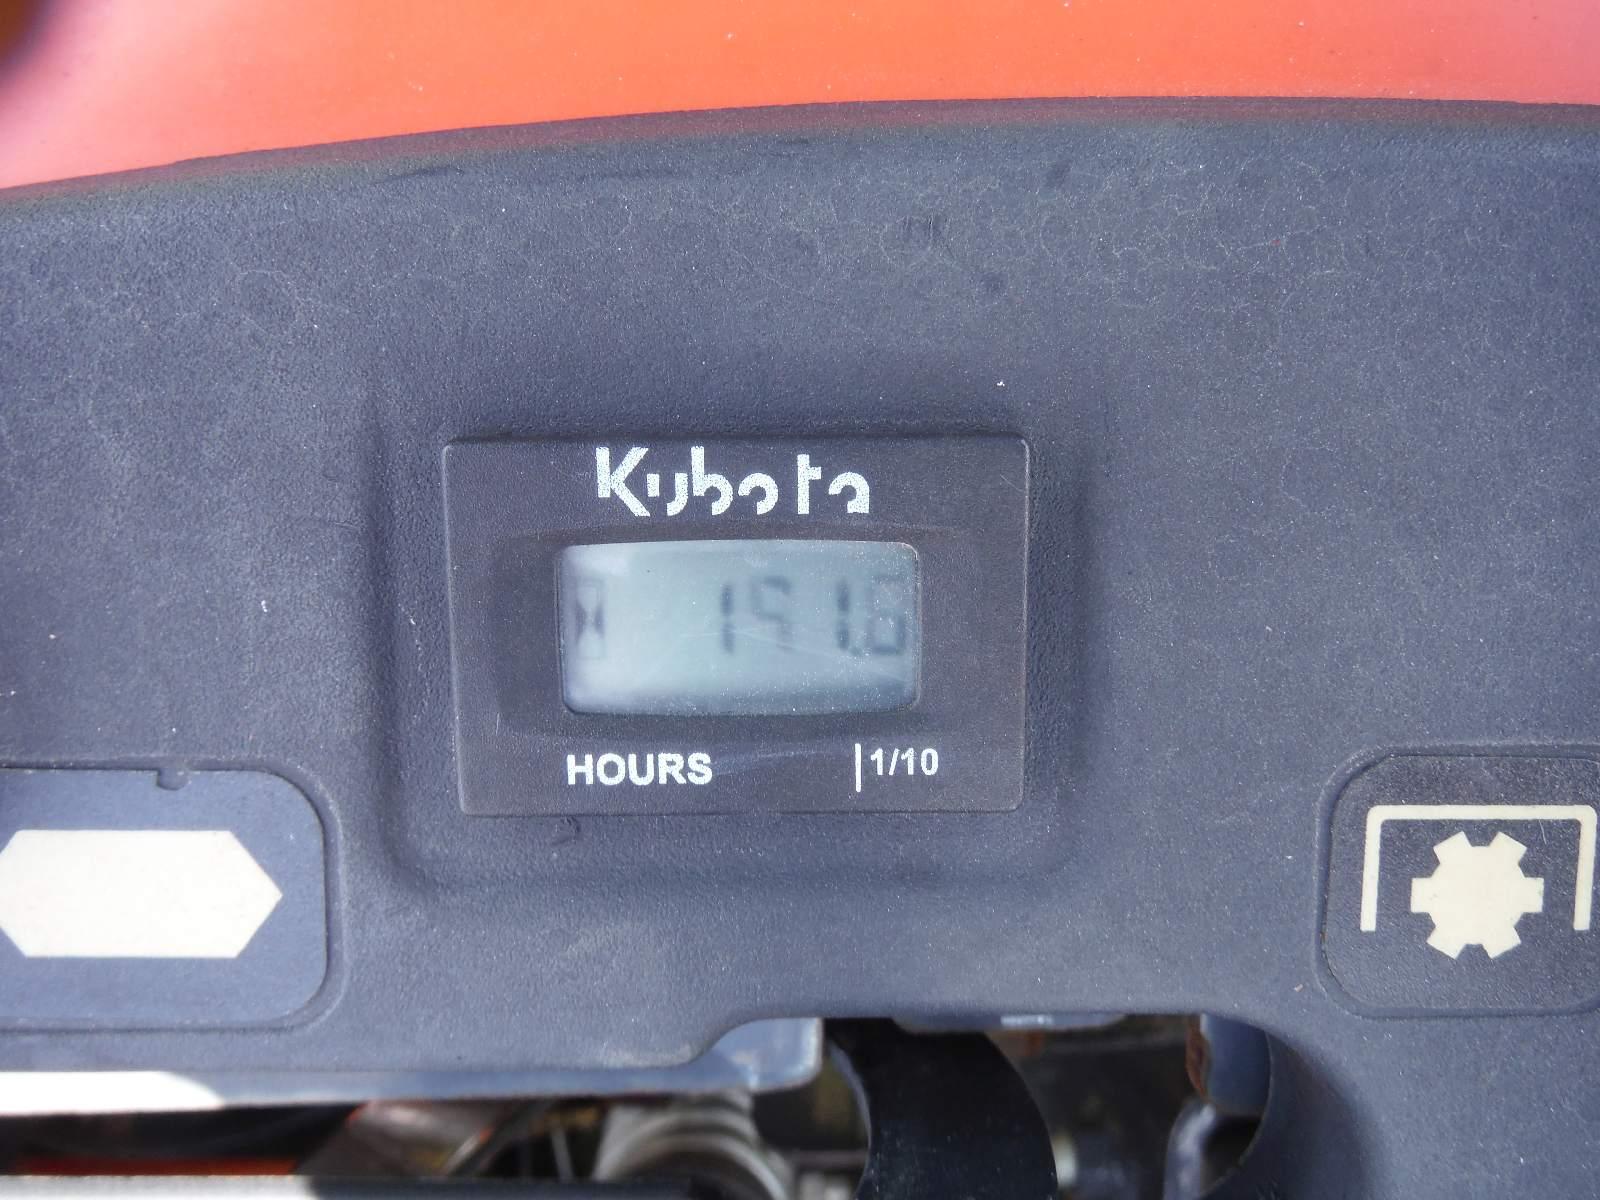 Kubota ZG222A Zero-turn Mower, s/n 57403: 48" Cut, Meter Shows 190 hrs